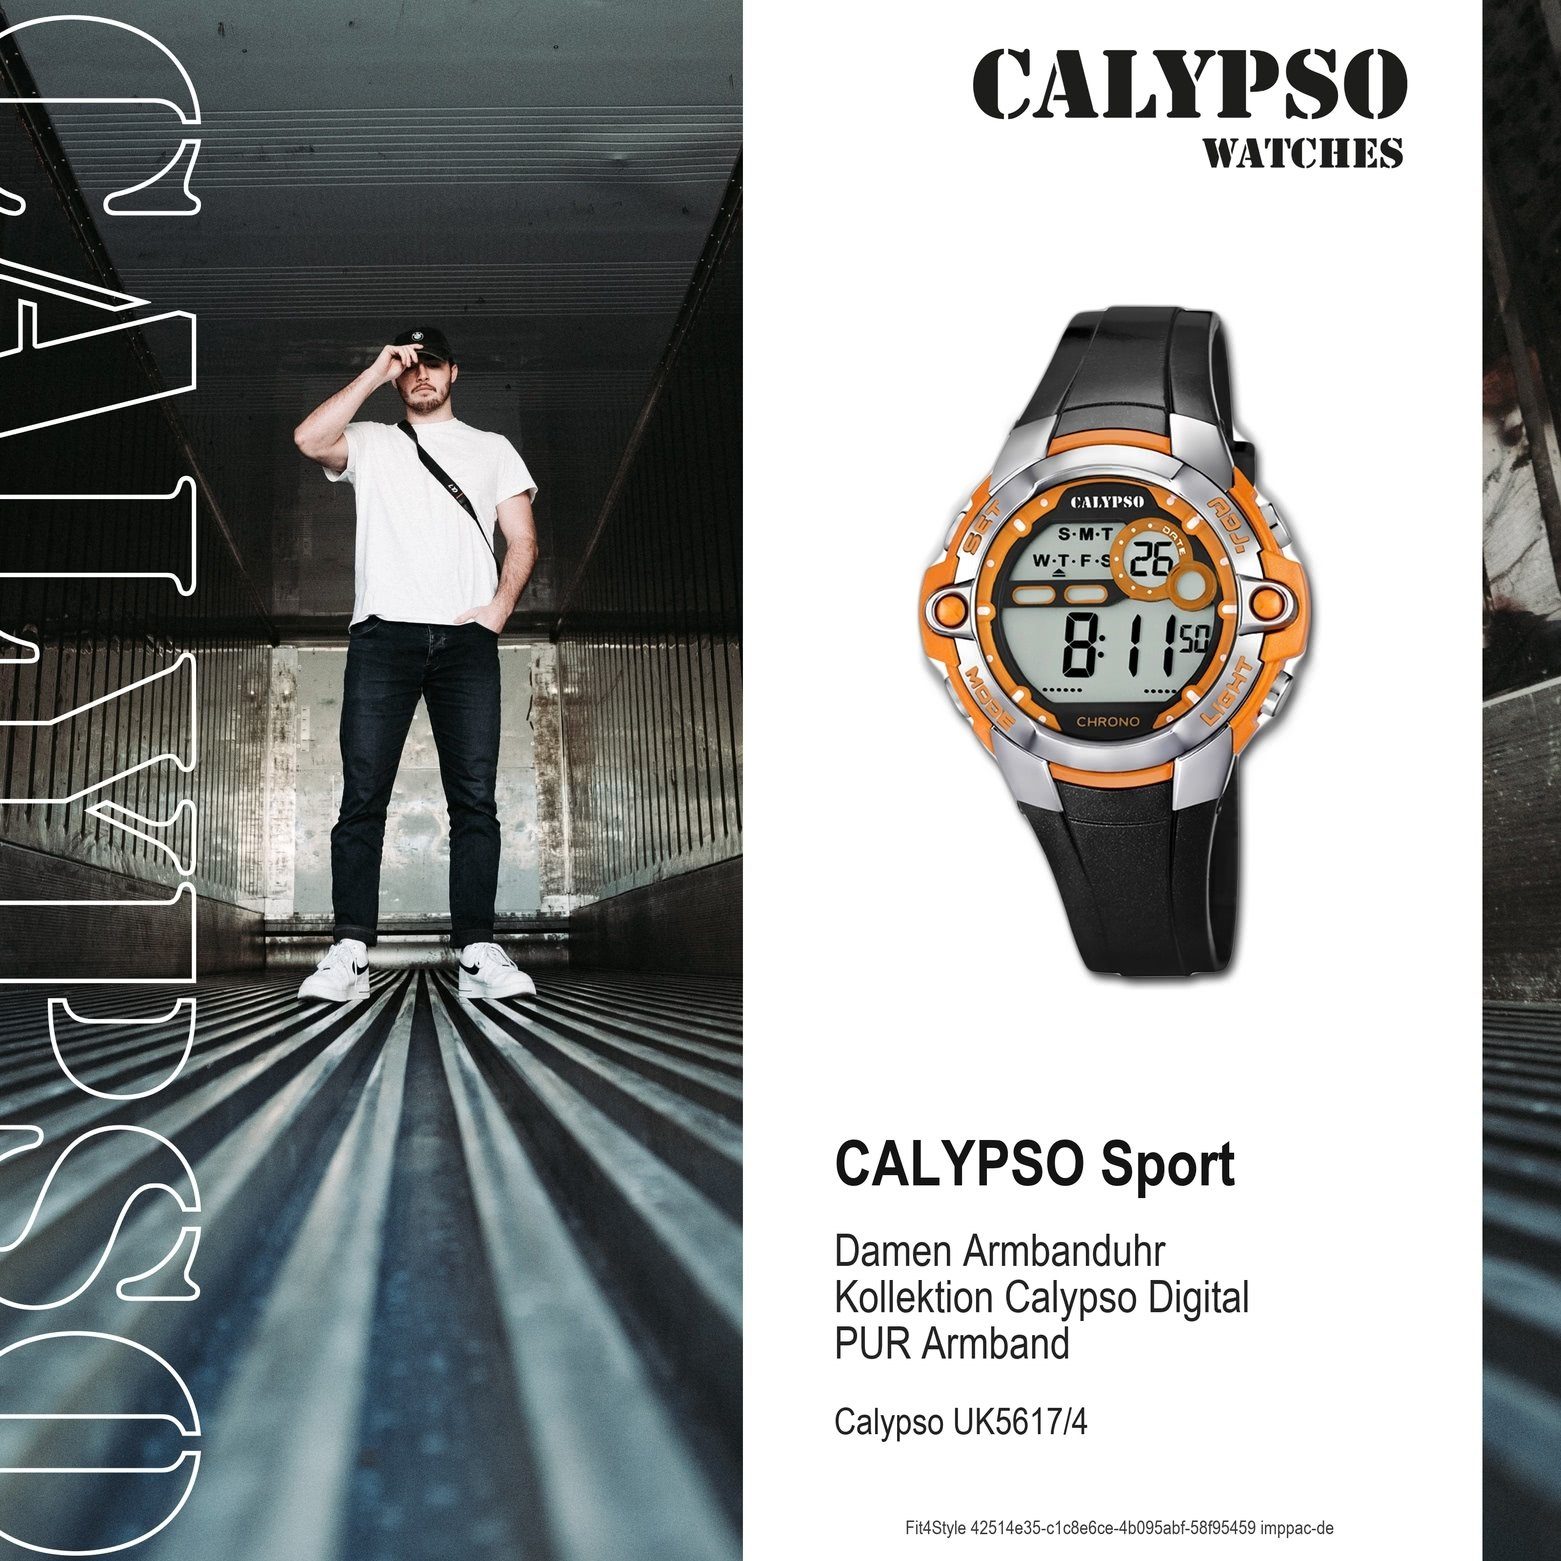 Herren Uhren CALYPSO WATCHES Digitaluhr UK5617/4 Calypso Unisex Uhr K5617/4 Kunststoffband, Damen, Herren Armbanduhr rund, PURar